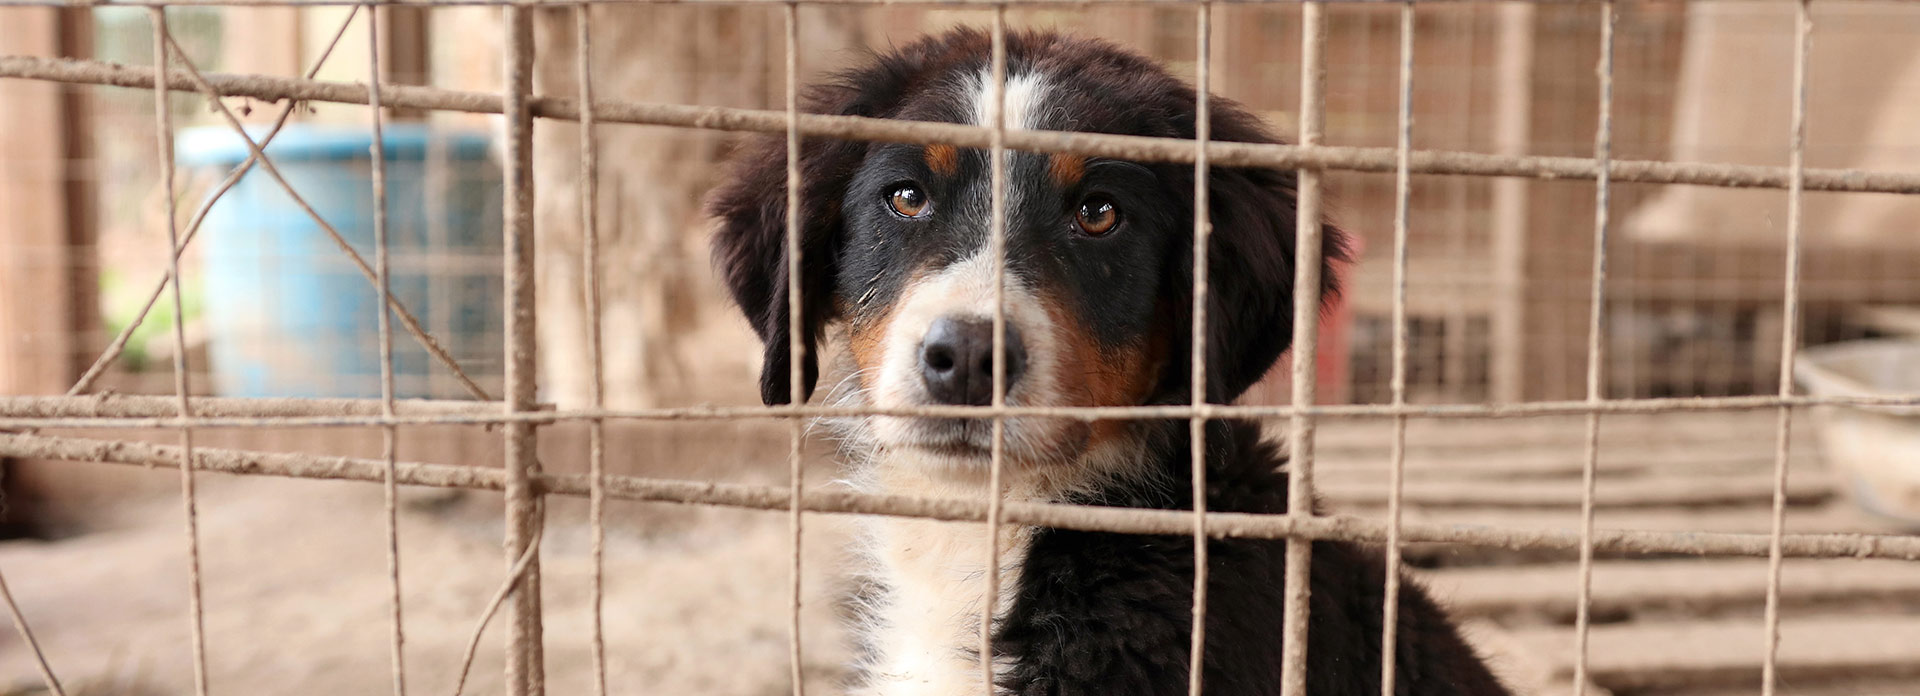 Report Animal Cruelty | Atlanta Humane Society